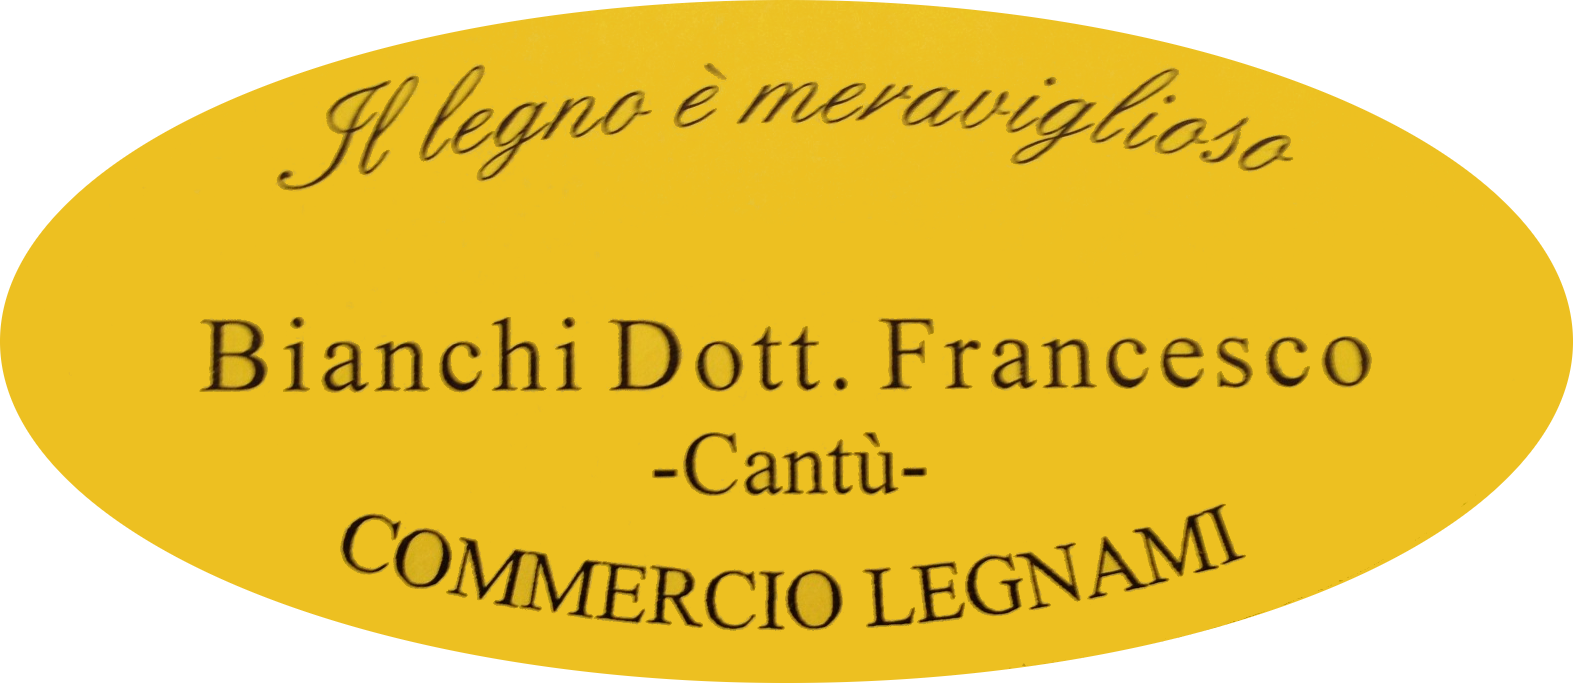 Bianchi dott. Francesco